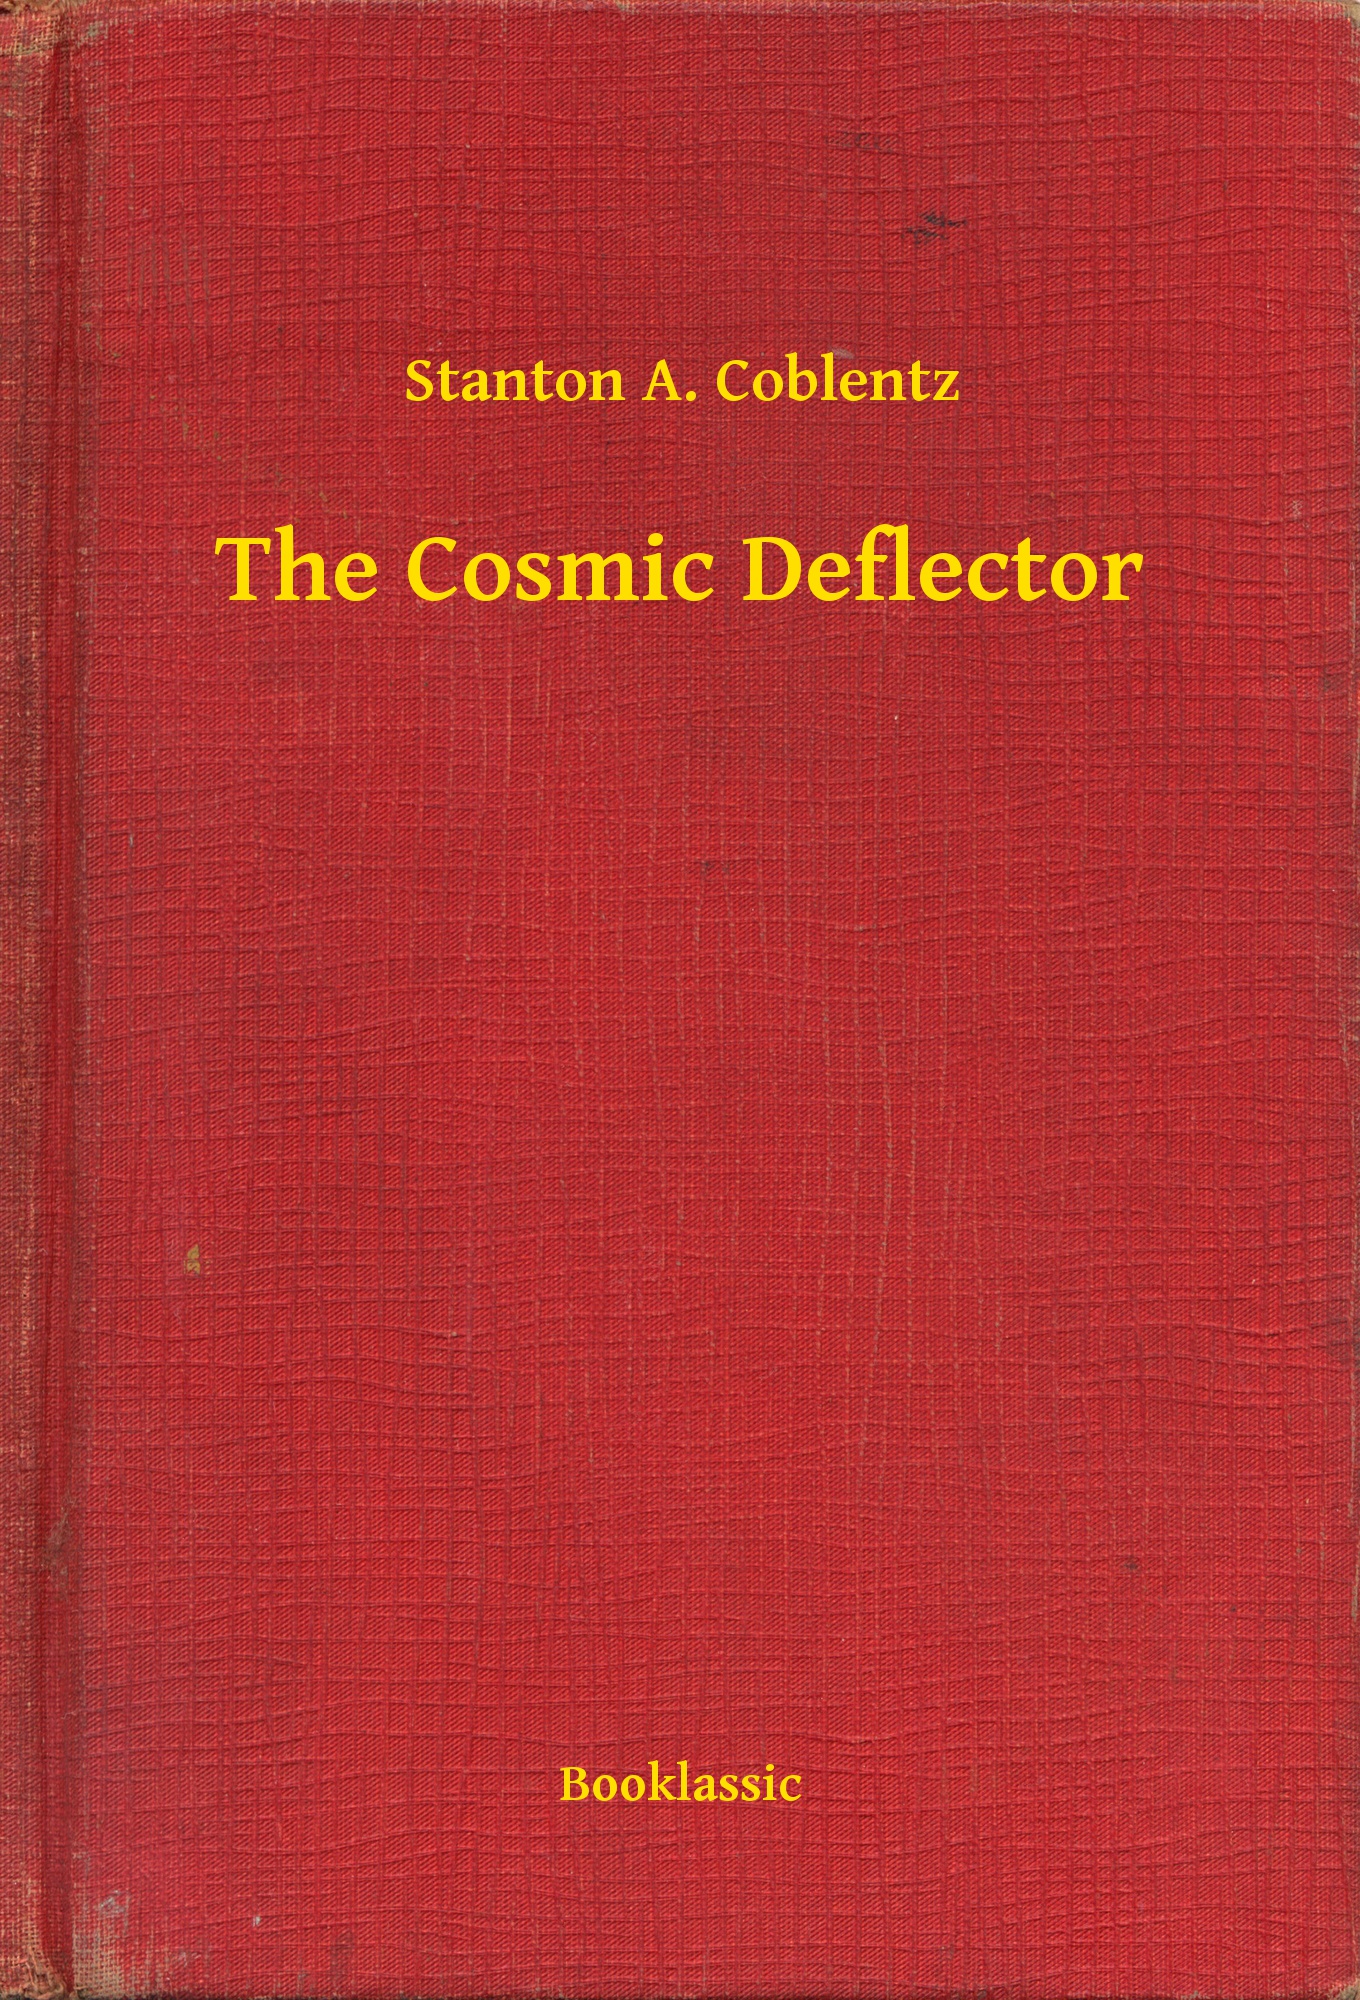 The Cosmic Deflector